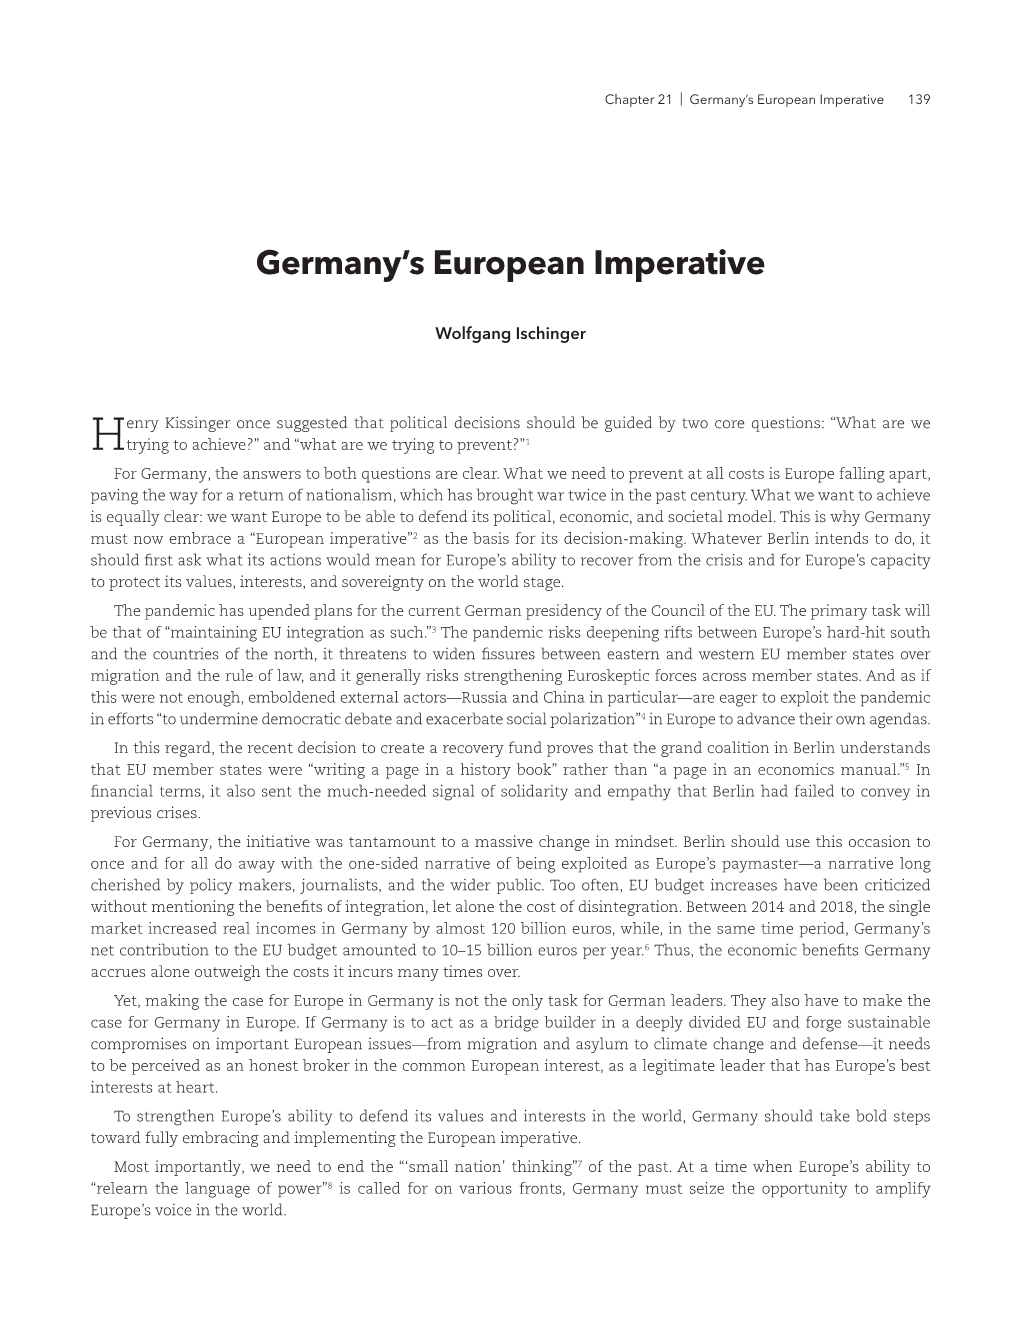 Germany's European Imperative